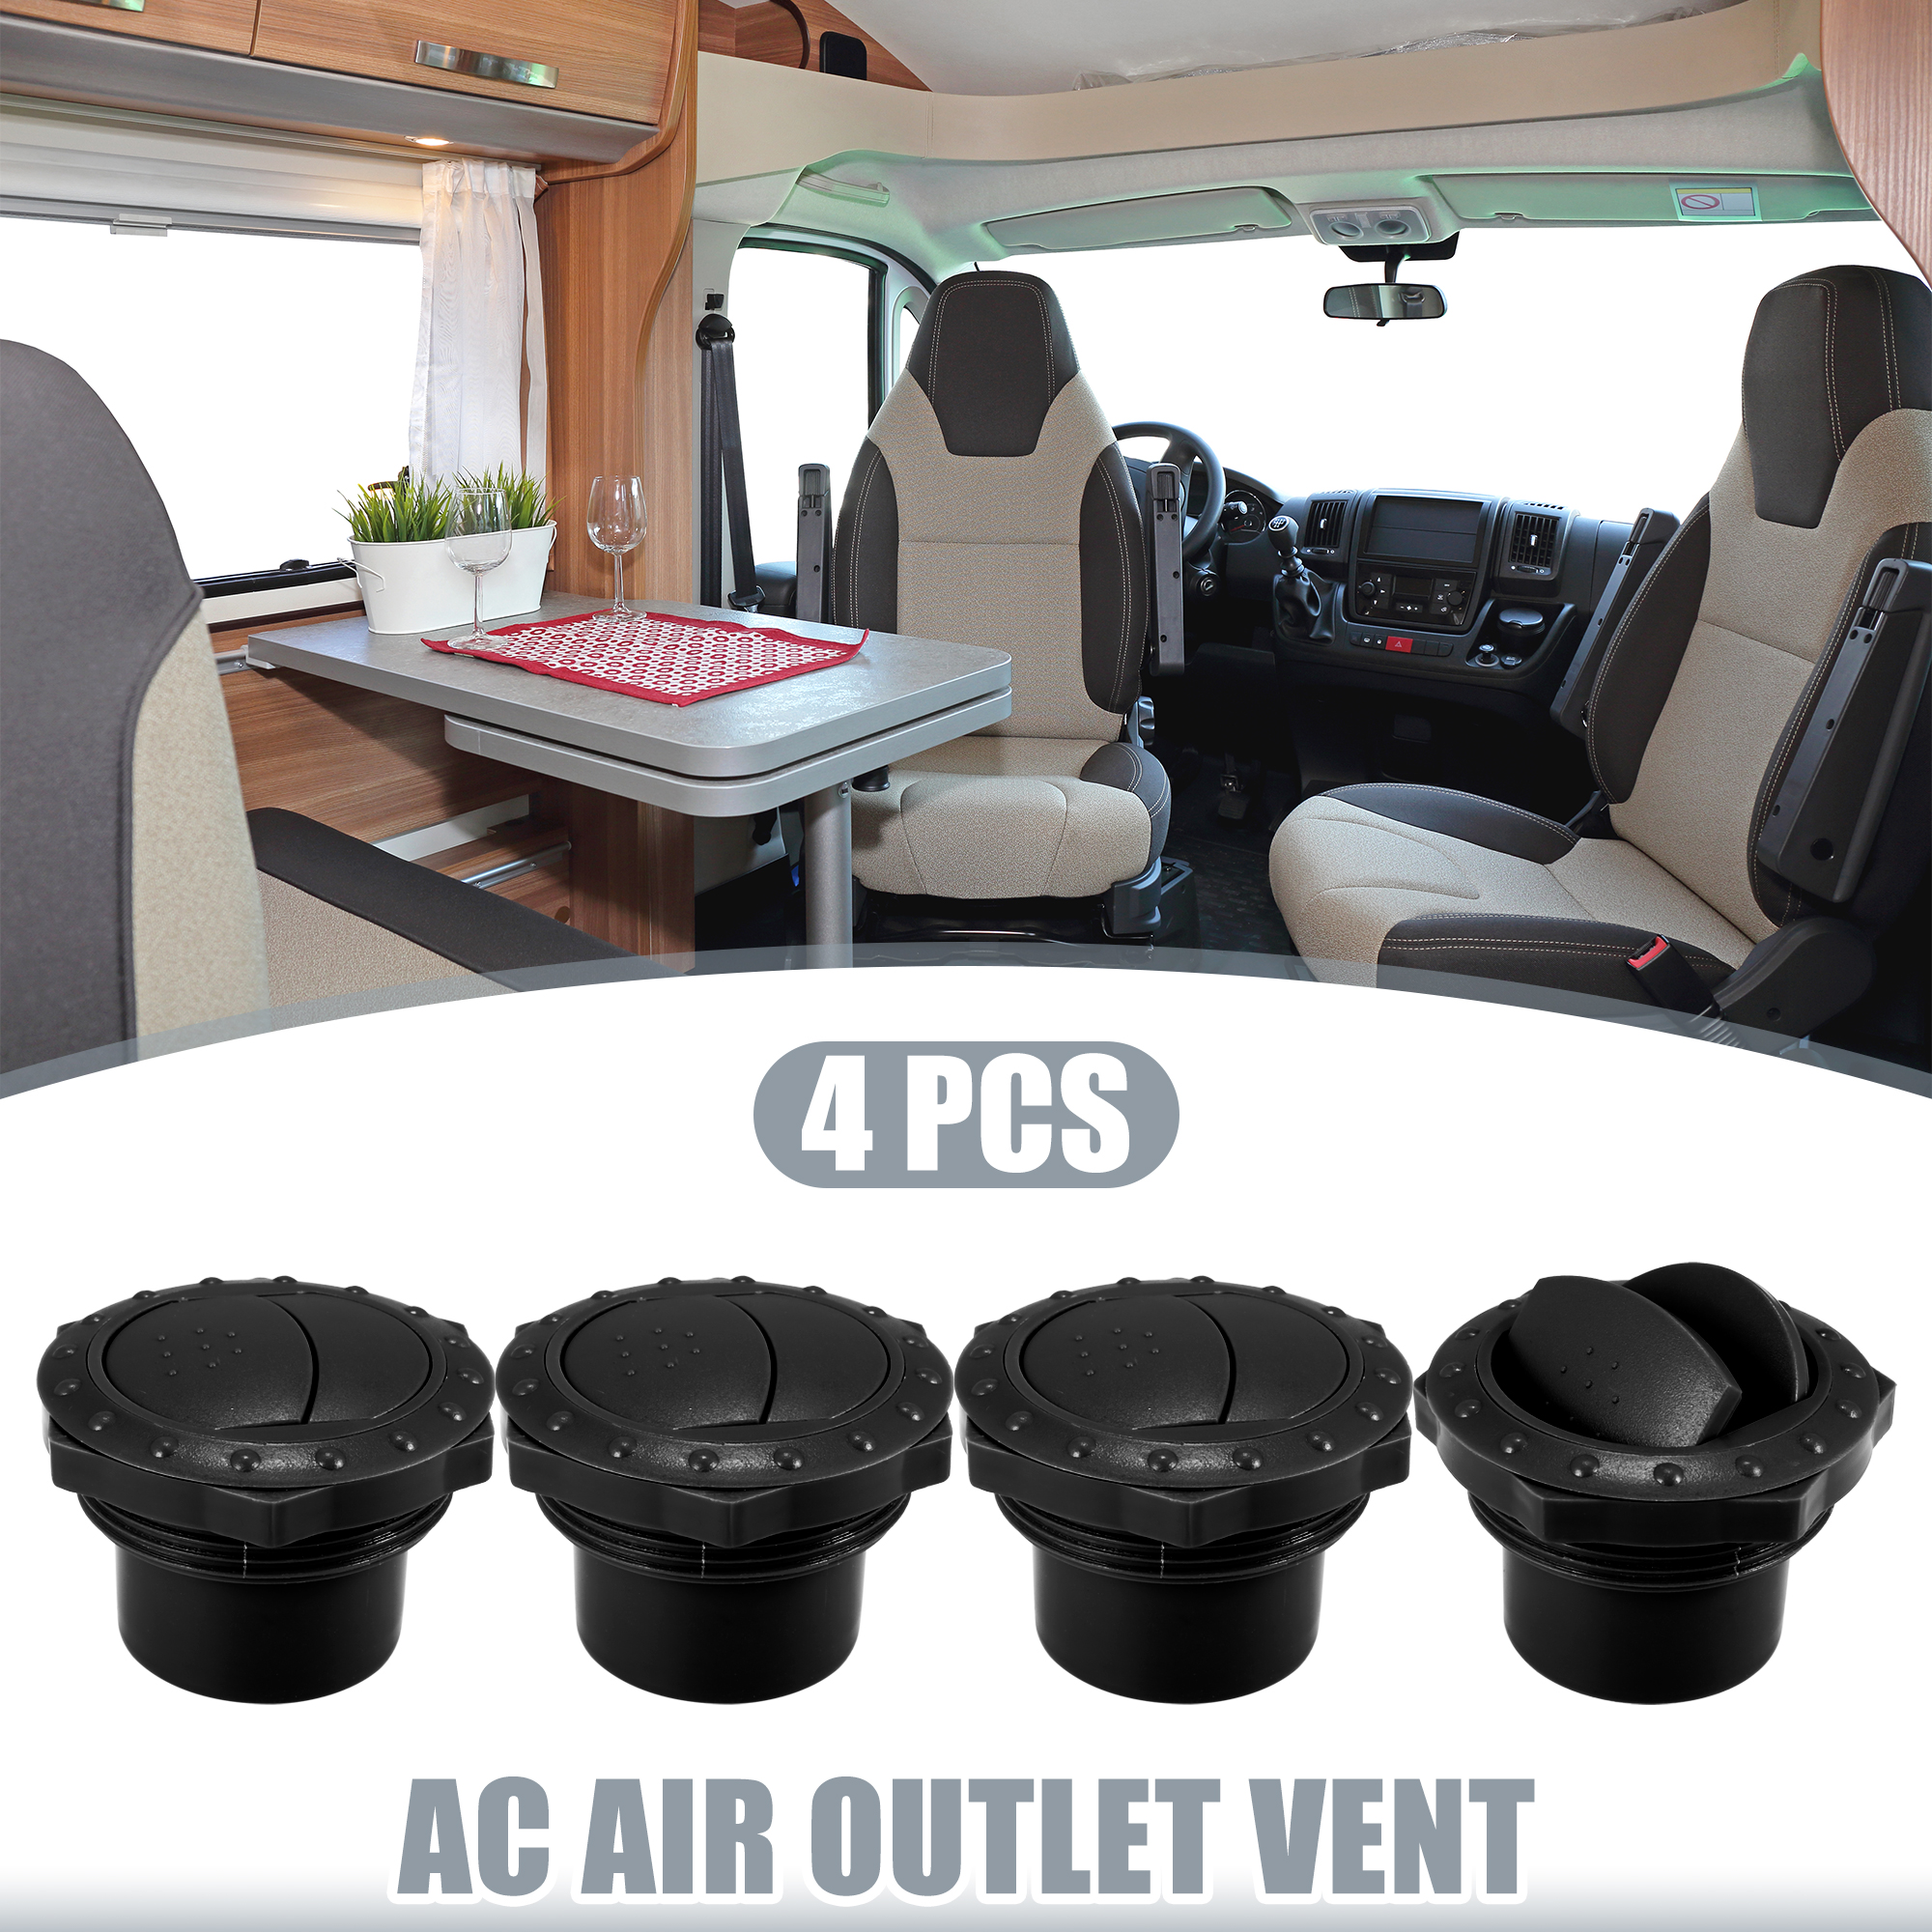 Unique Bargains 4pcs Universal 50mm Vent Air Outlet Rotating Round Ceiling for Car Bus RV ATV